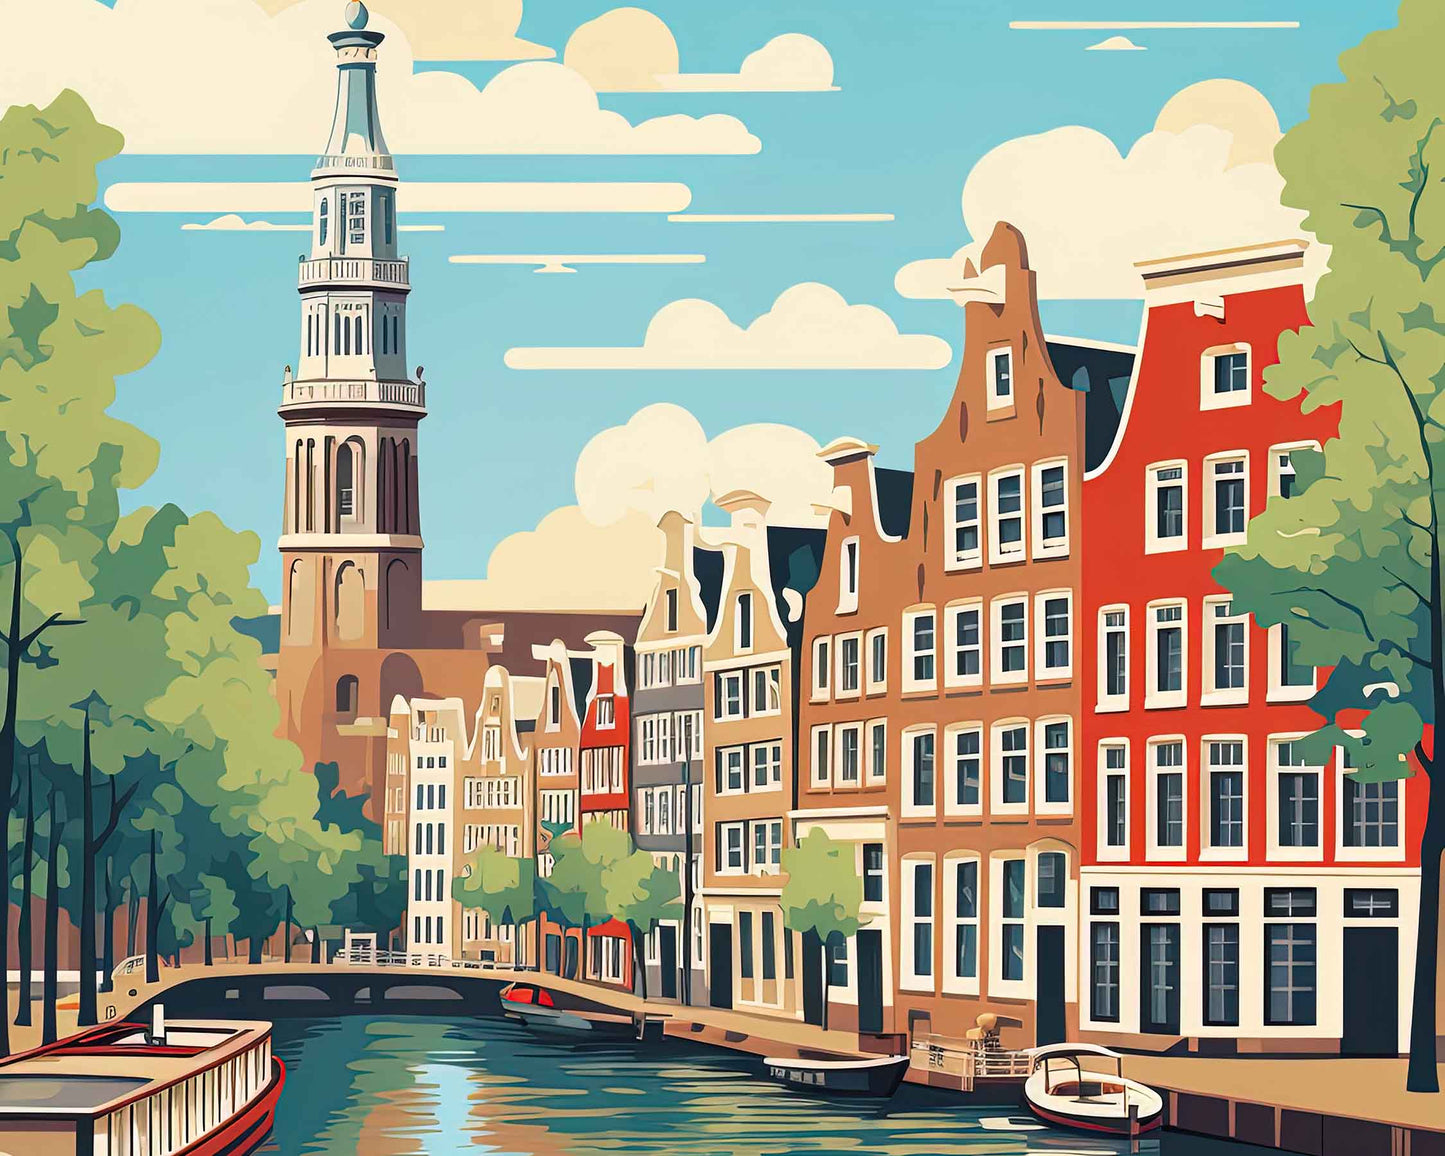 Framed Image of Amsterdam Travel Print Wall Art Poster Holland Illustration